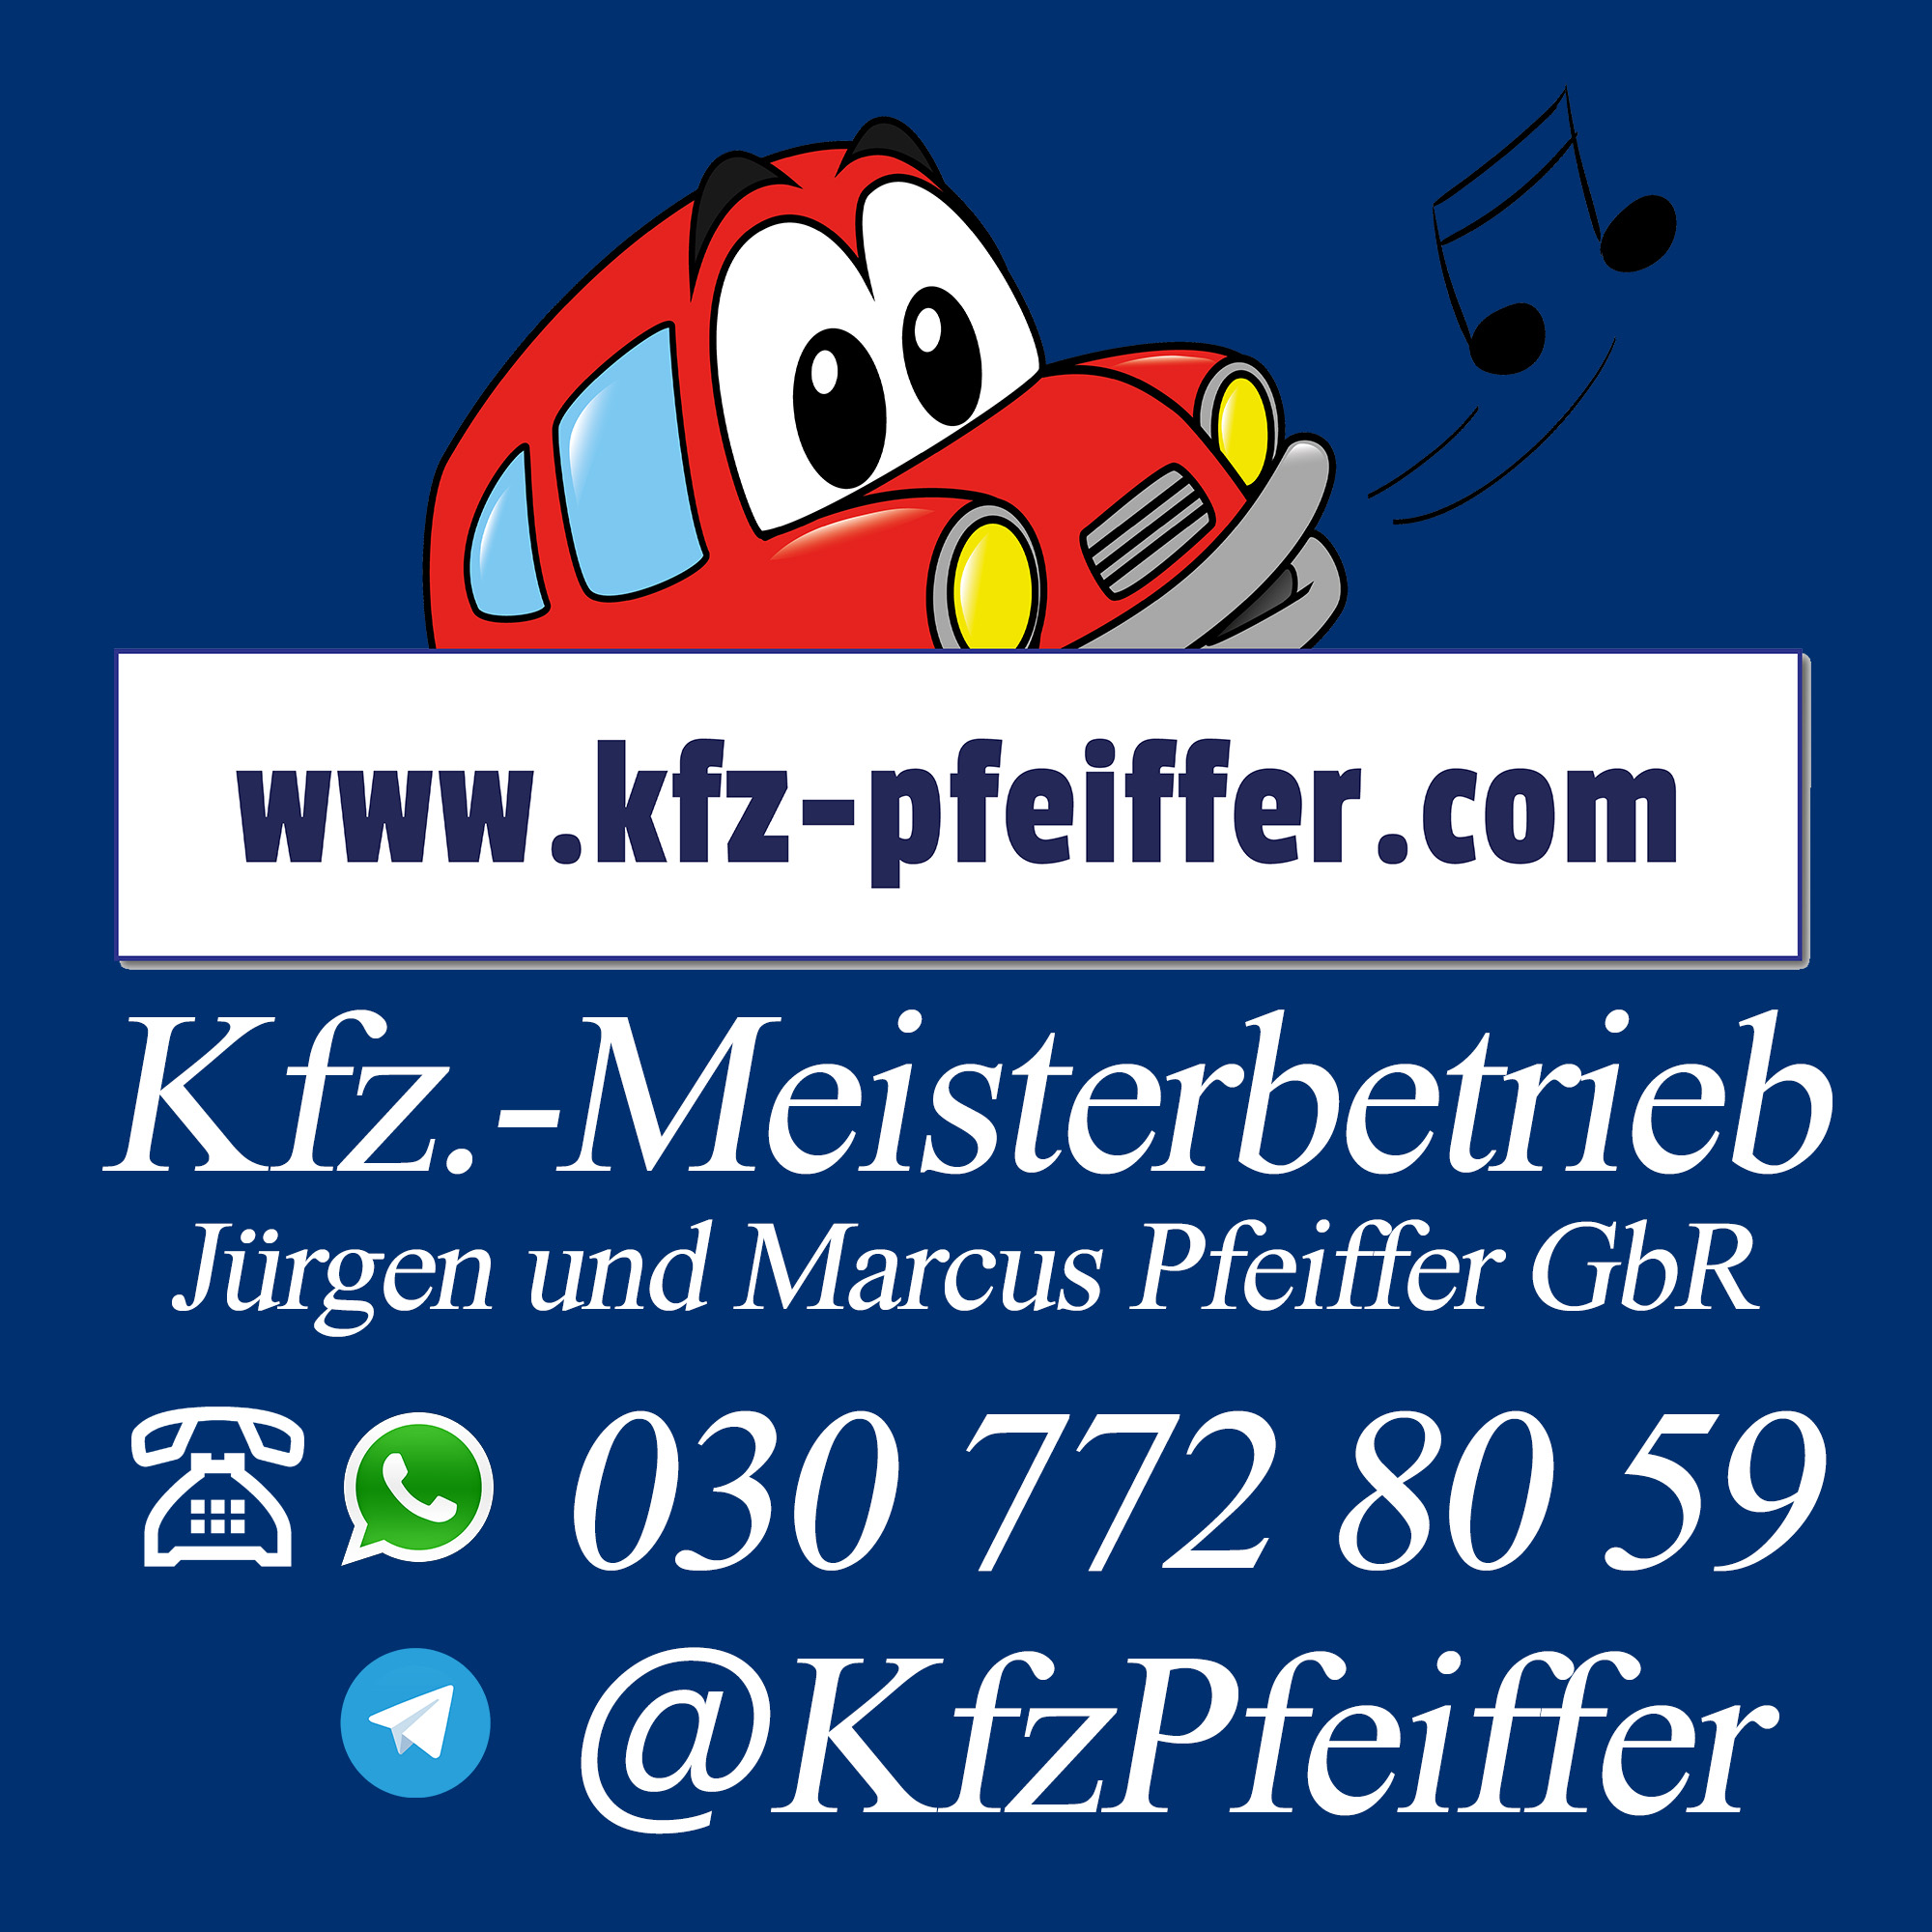 (c) Kfz-pfeiffer.com